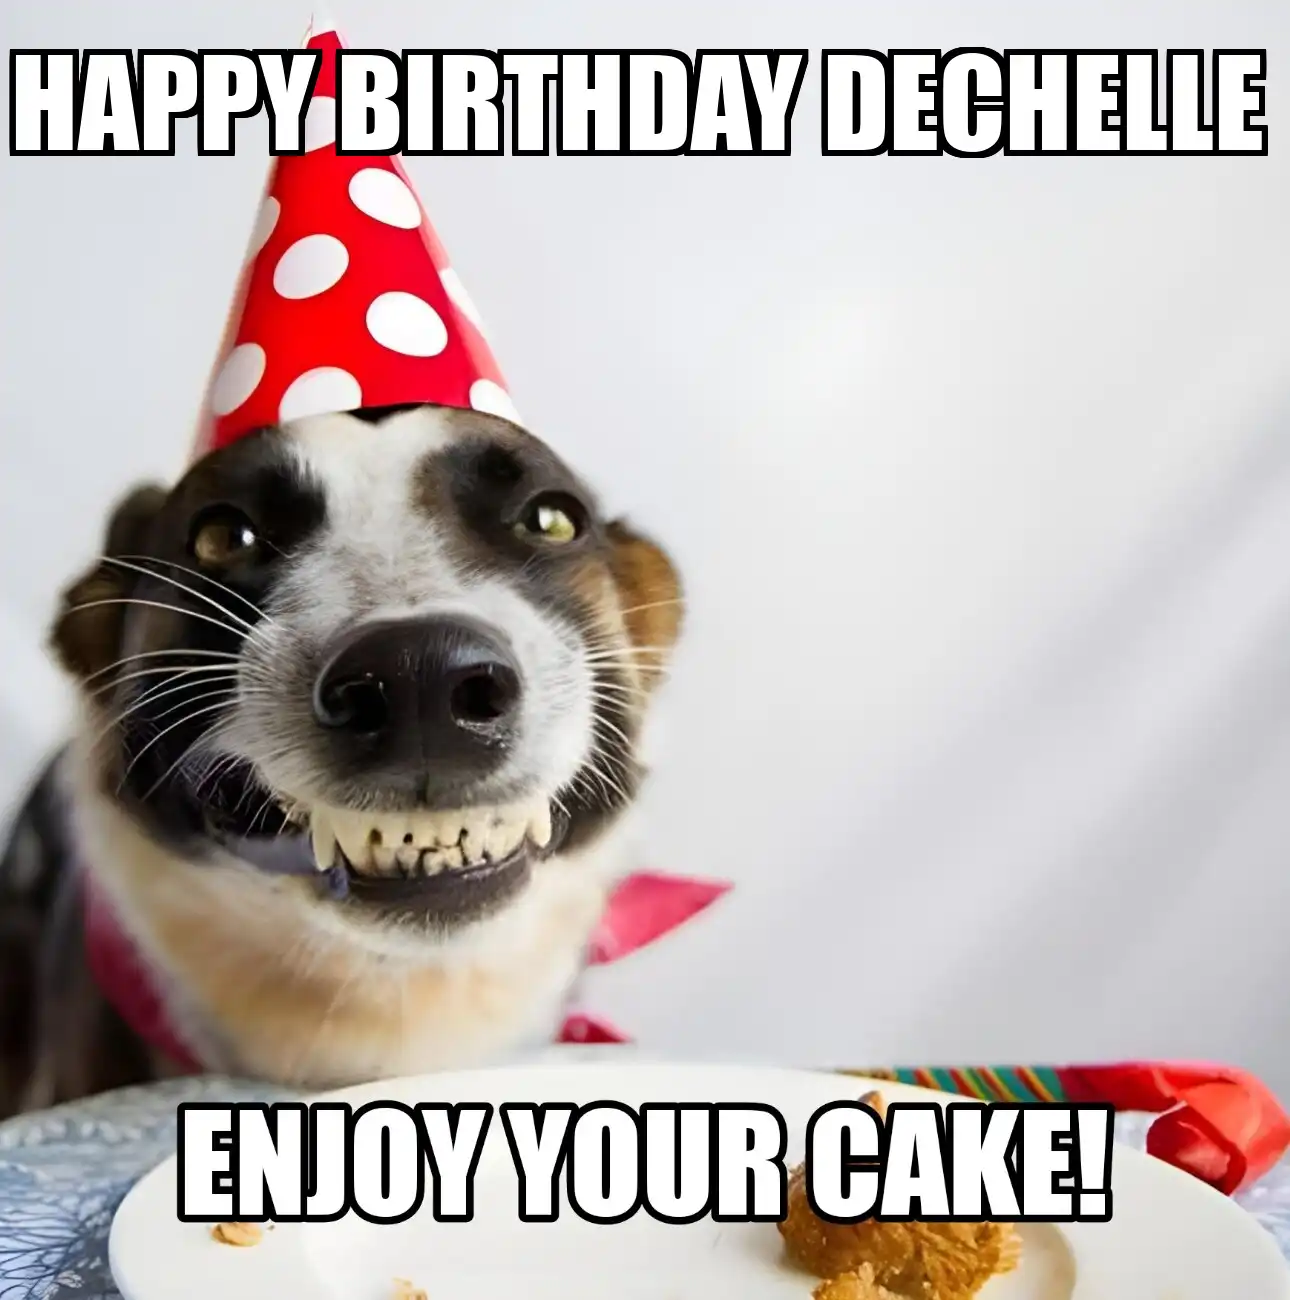 Happy Birthday Dechelle Enjoy Your Cake Dog Meme